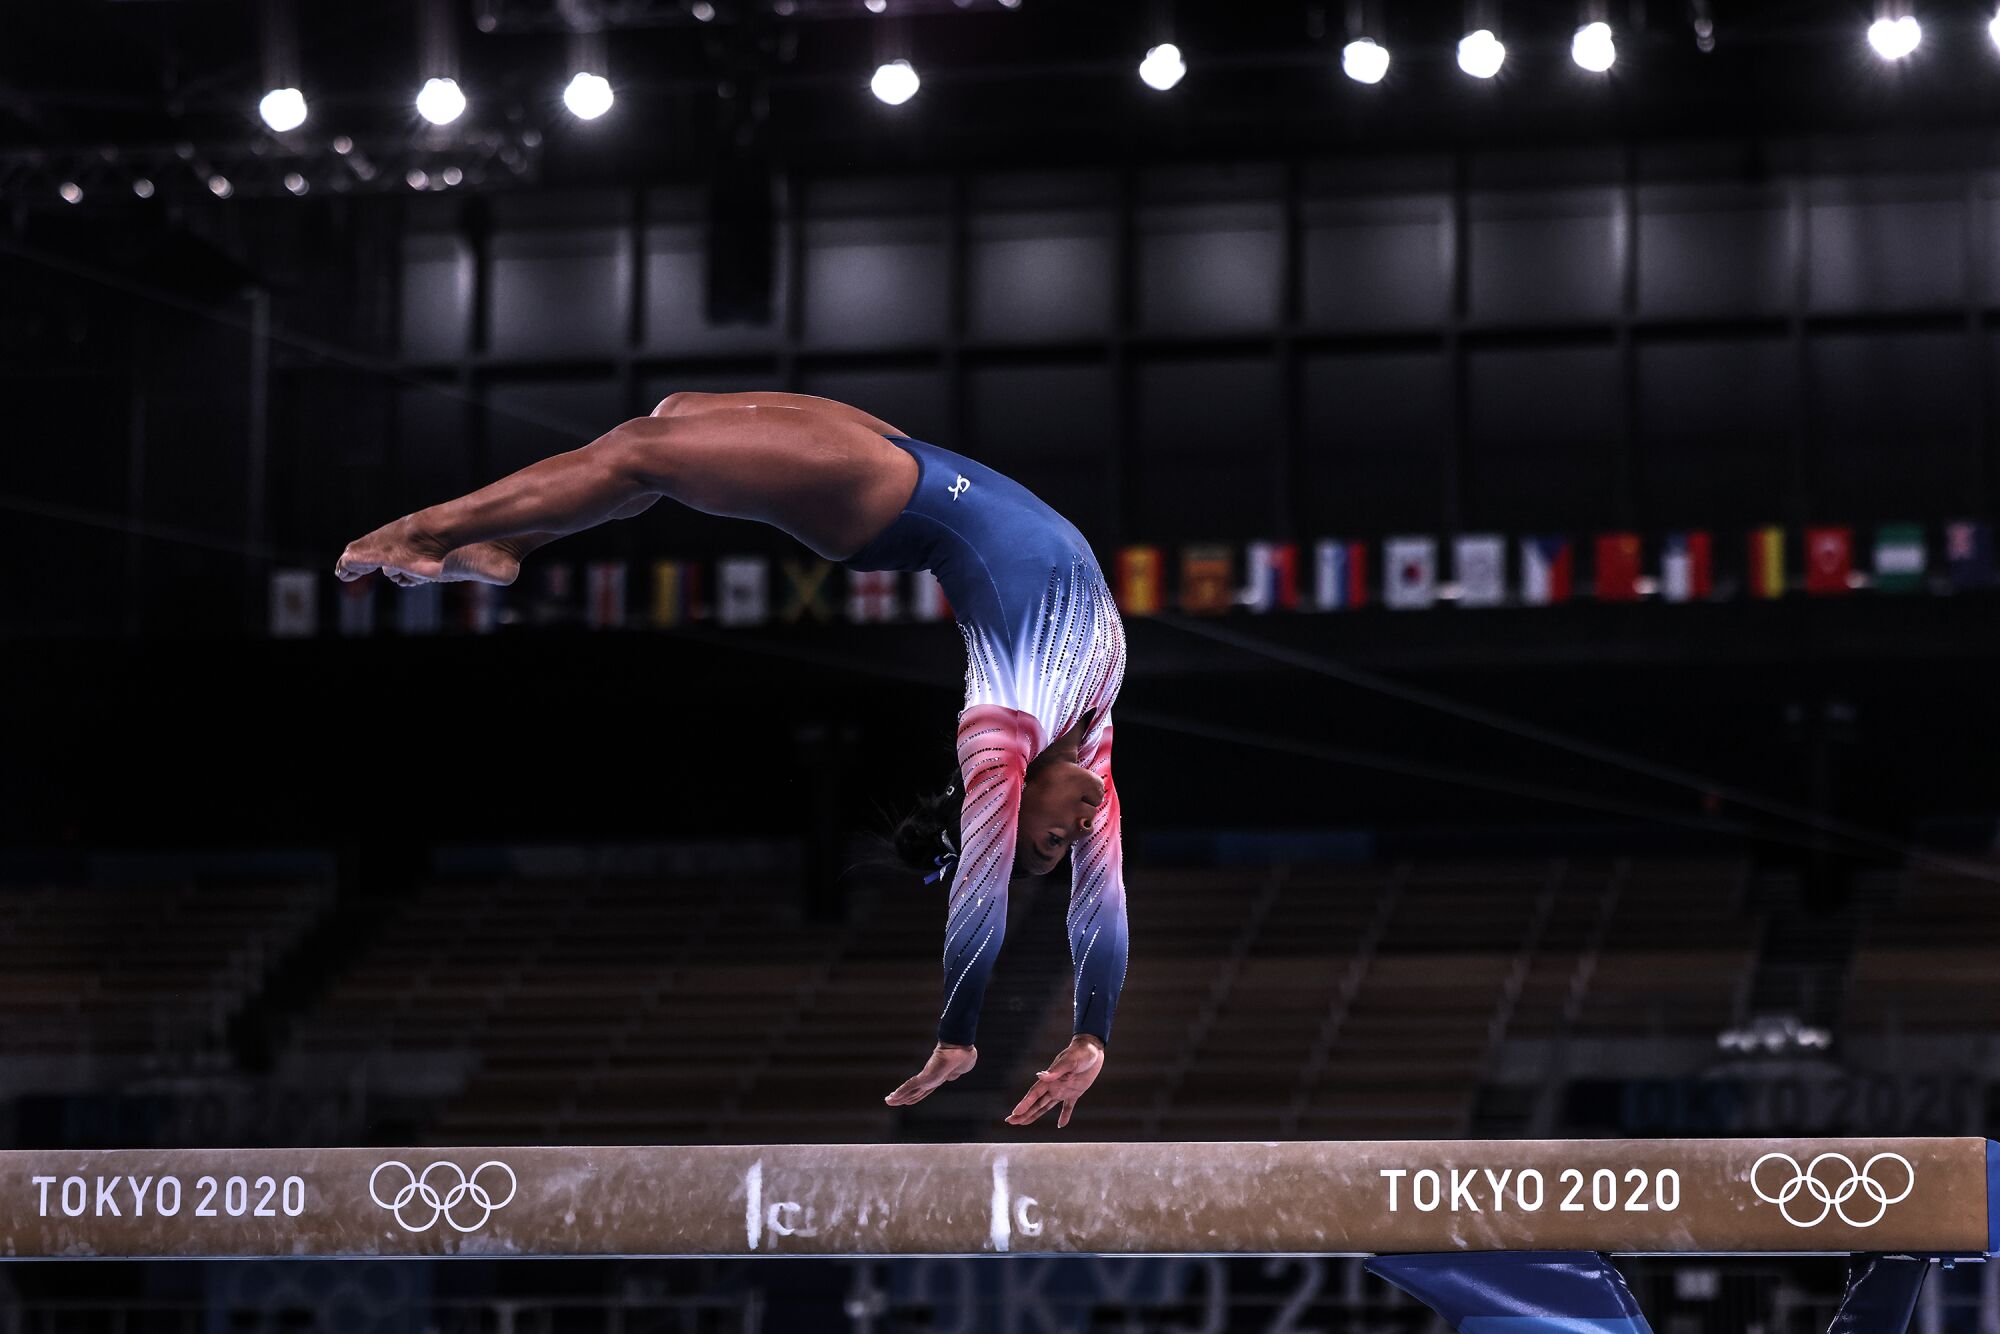 USA gymnast Simone Biles performs in the Tokyo 2020 Olympic Women's Balance Beam.